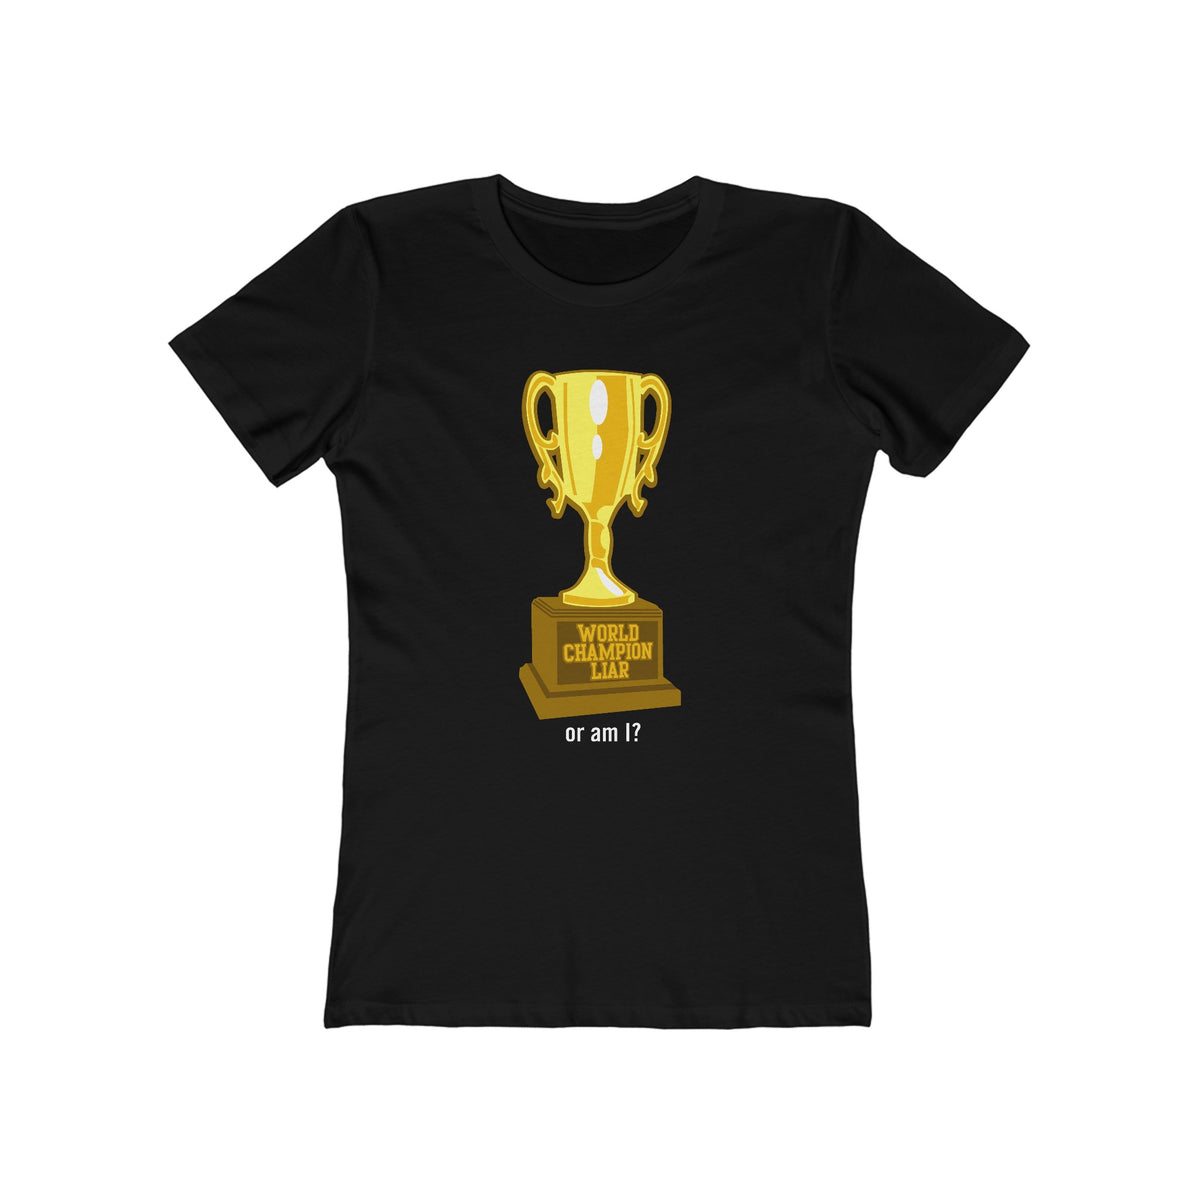 World Champion Liar - Or Am I? - Women’s T-Shirt